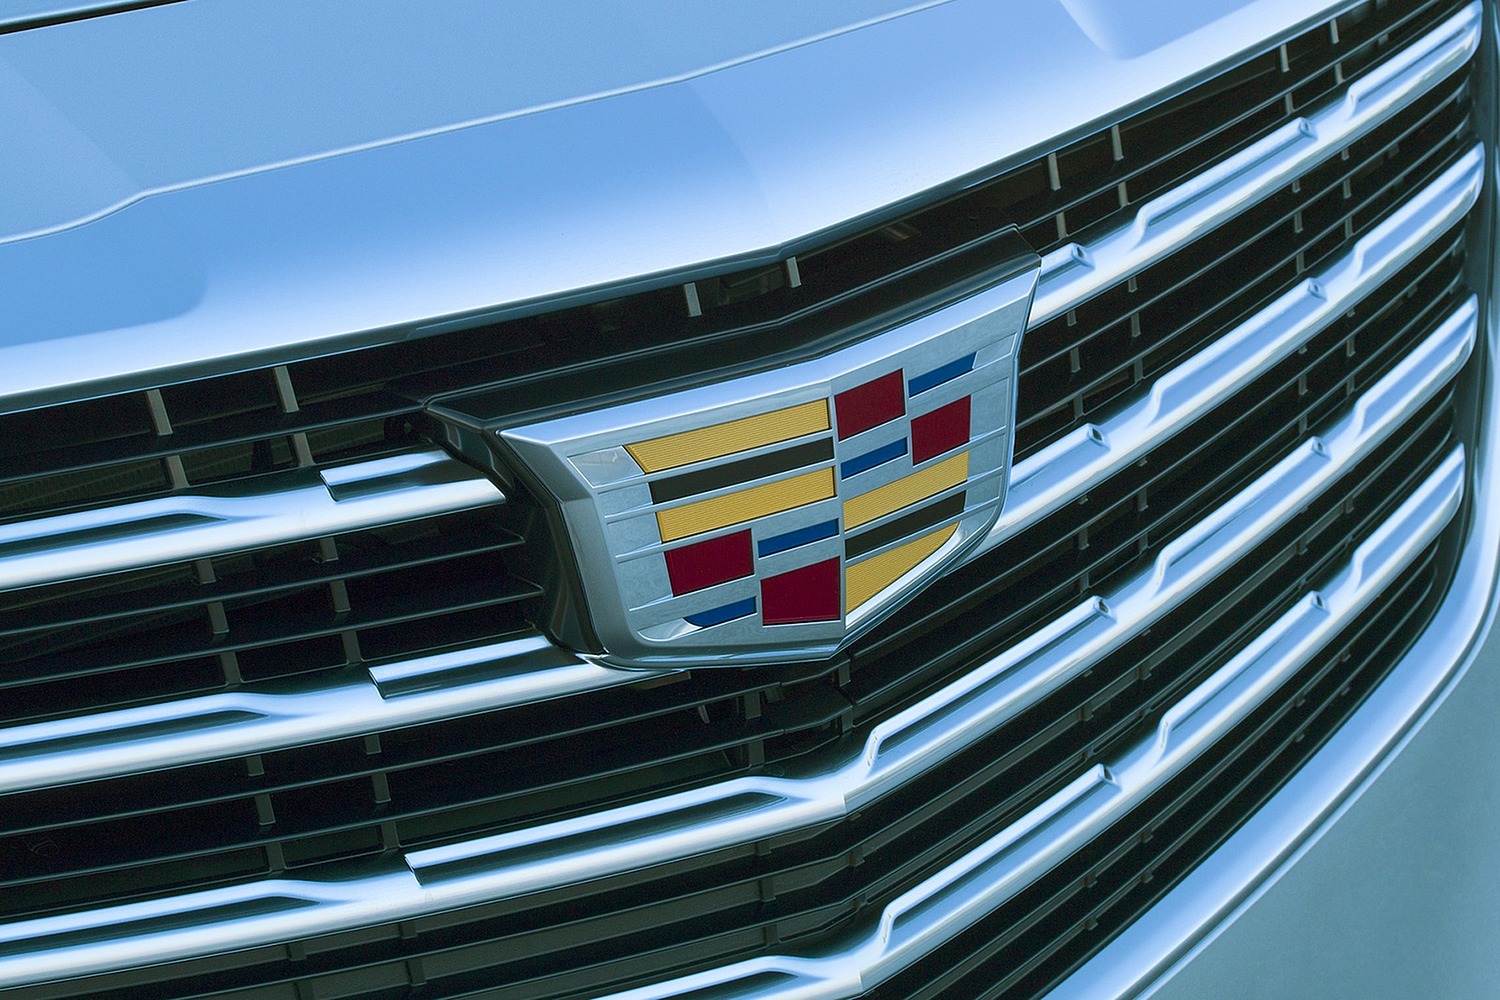 Cadillac CTS Luxury Sedan Front Badge (2017 model year shown)